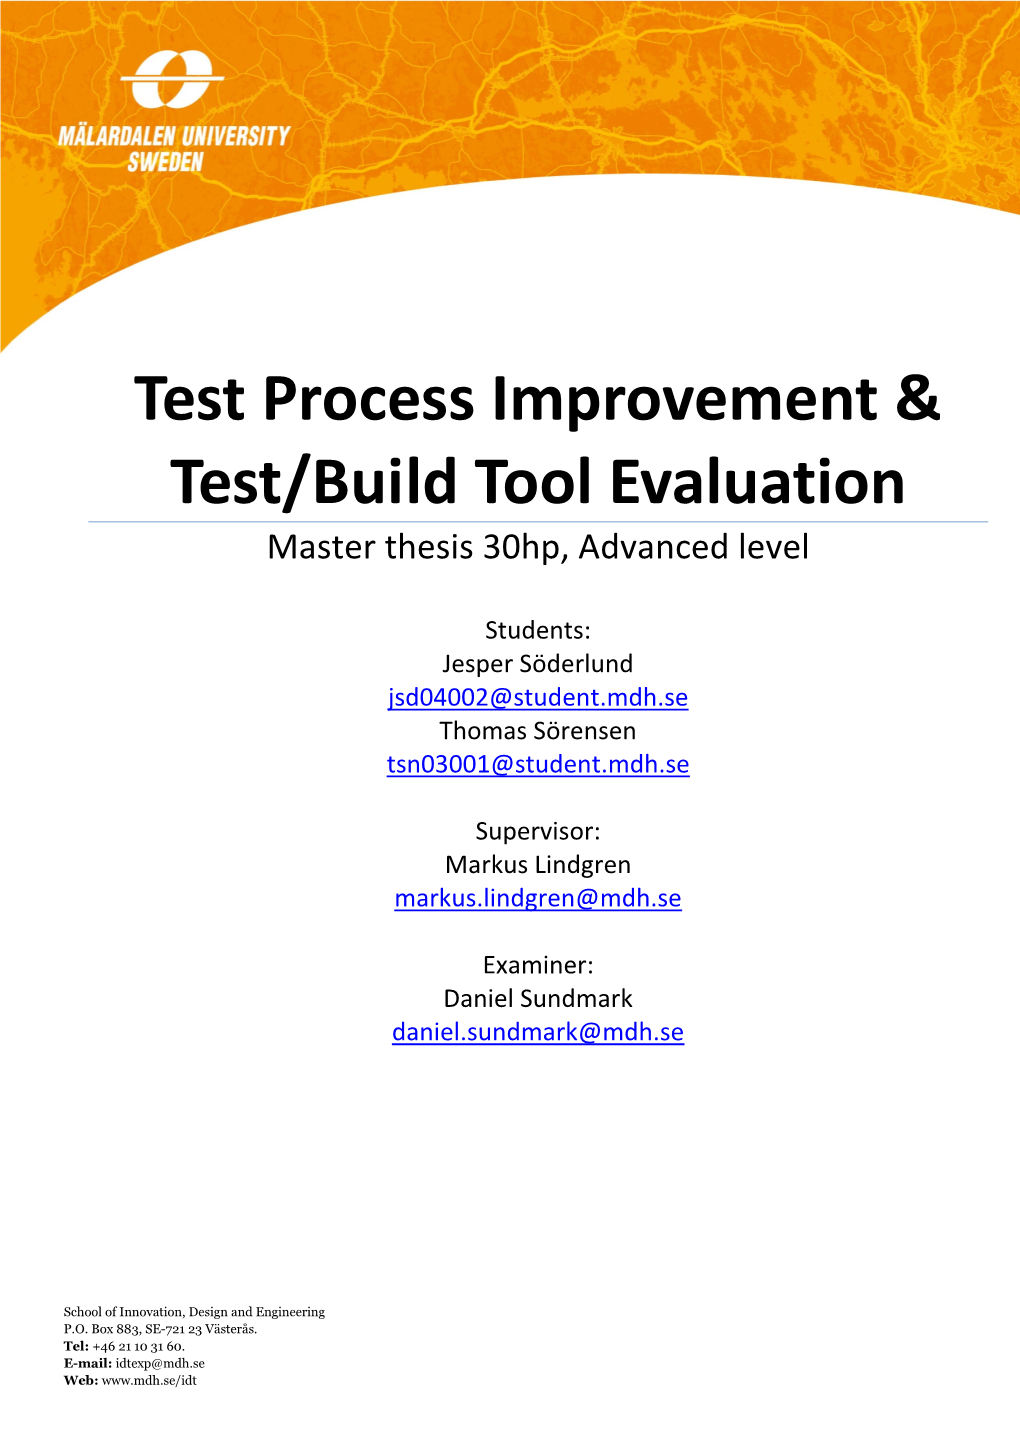 Test Process Improvement & Test/Build Tool Evaluation